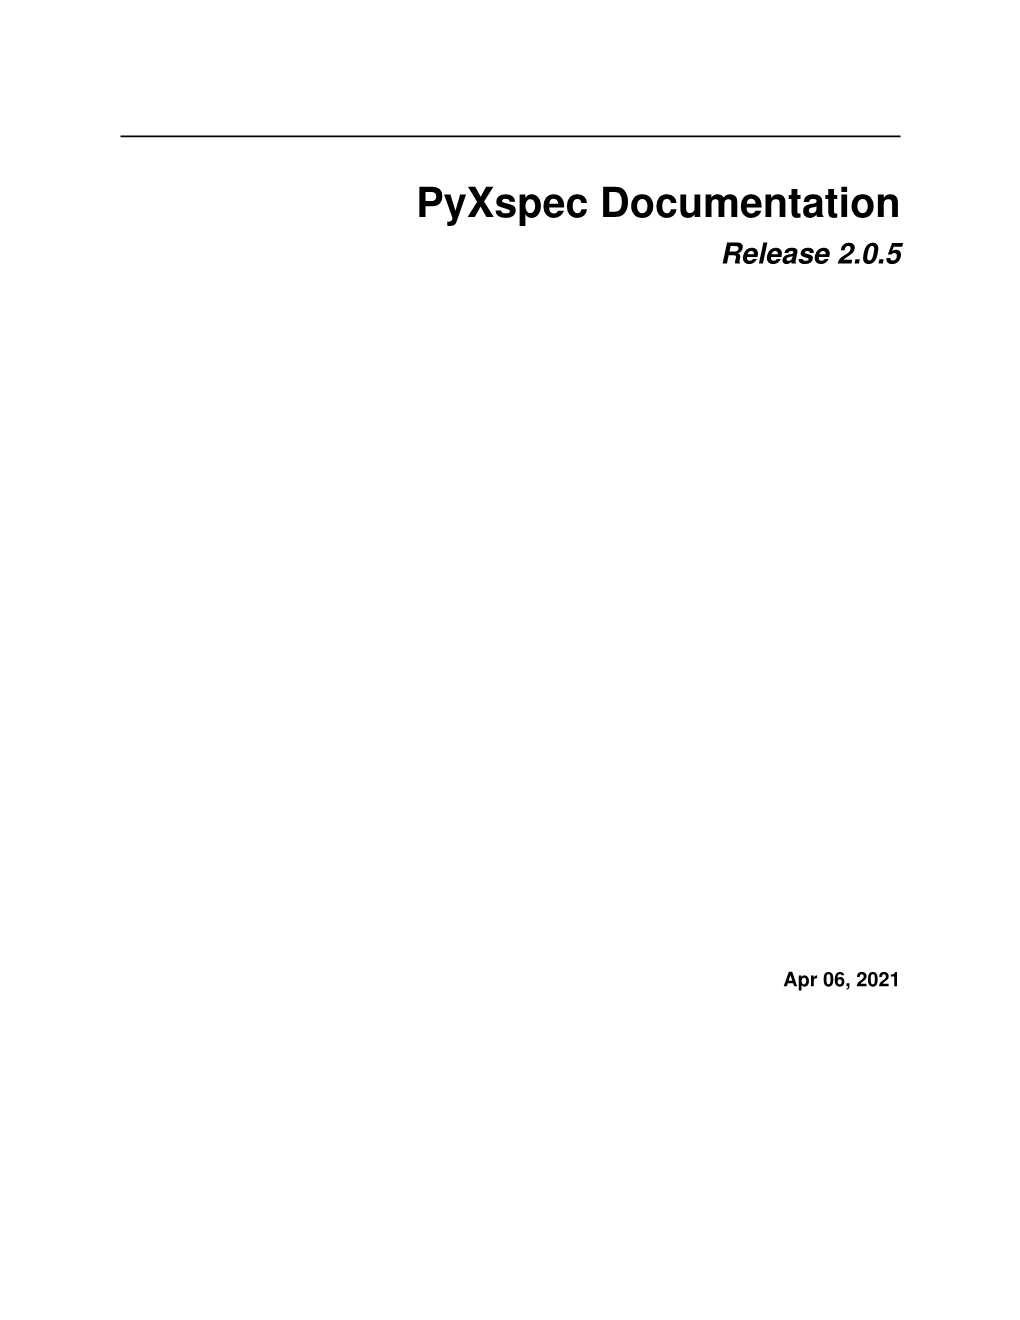 Pyxspec Documentation Release 2.0.5